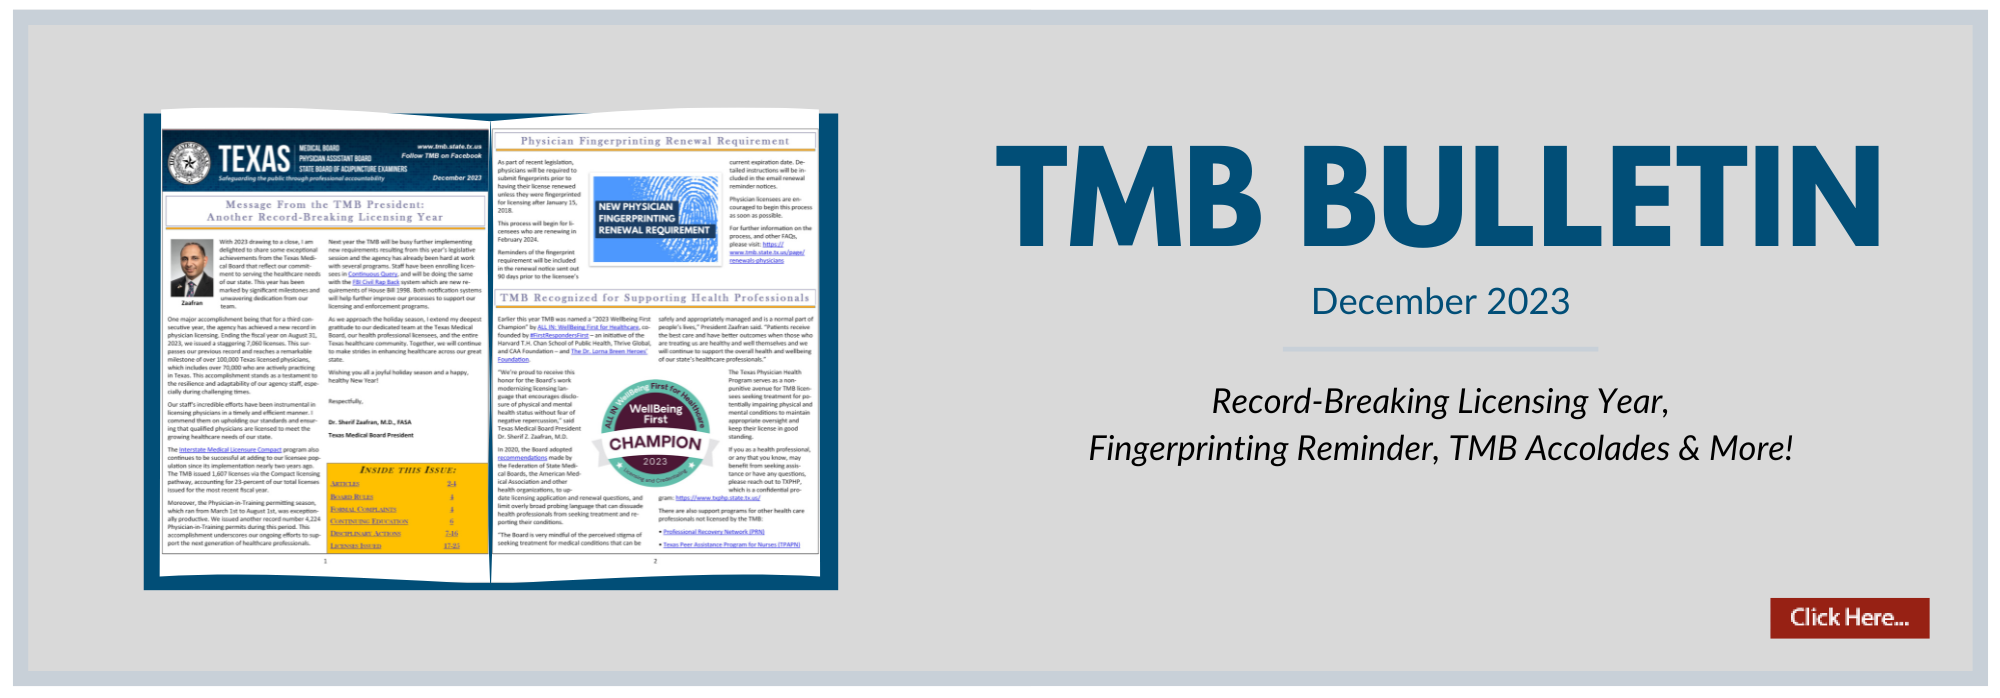 Latest TMB Bulletin Banner